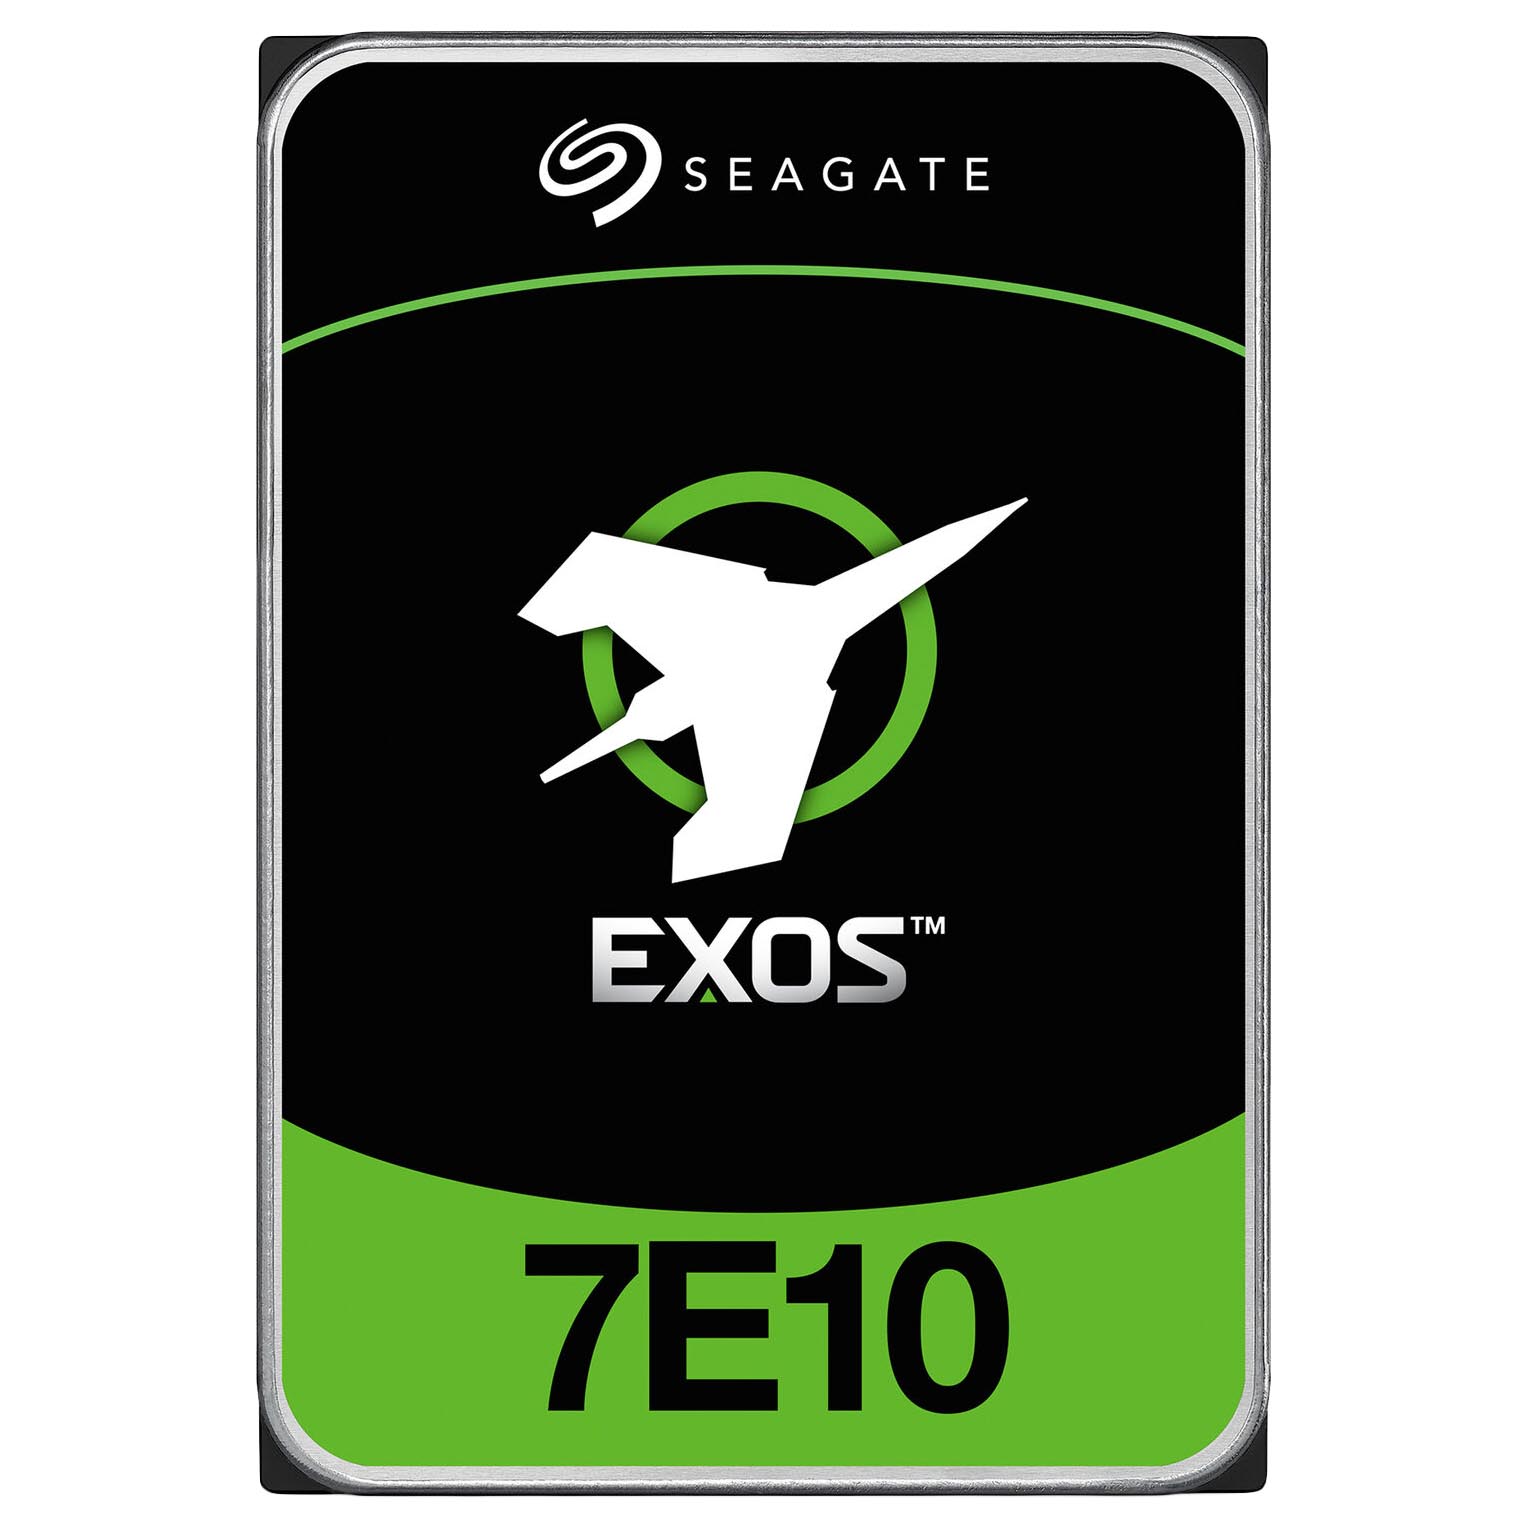 Внутренний жесткий диск Seagate Exos 7E10, ST2000NM001B, 2 Тб жесткий диск seagate exos x20 20тб st20000nm007d